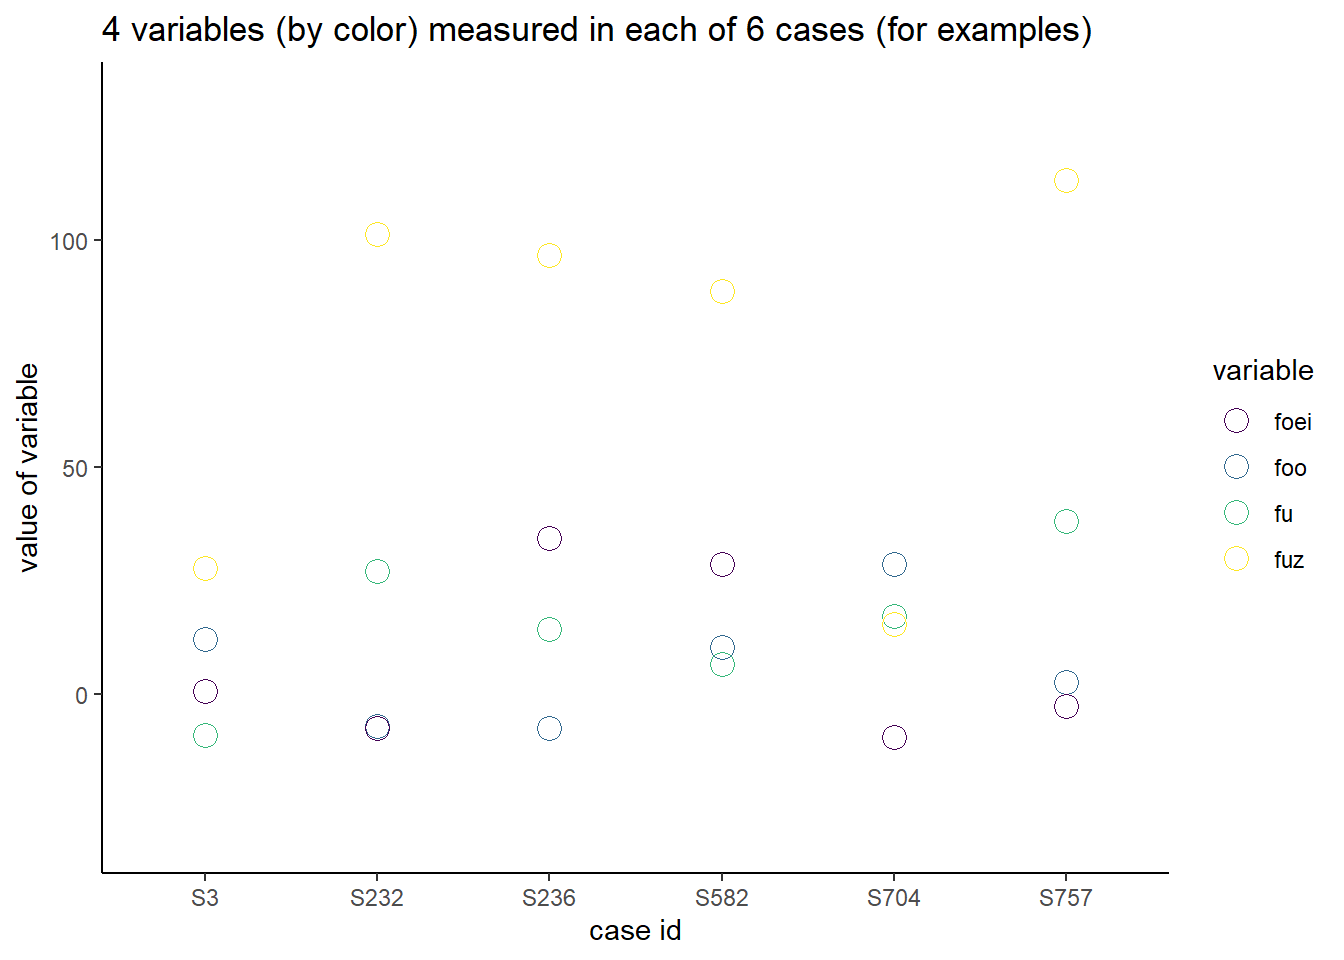 Representative row samples drawn from data set. 